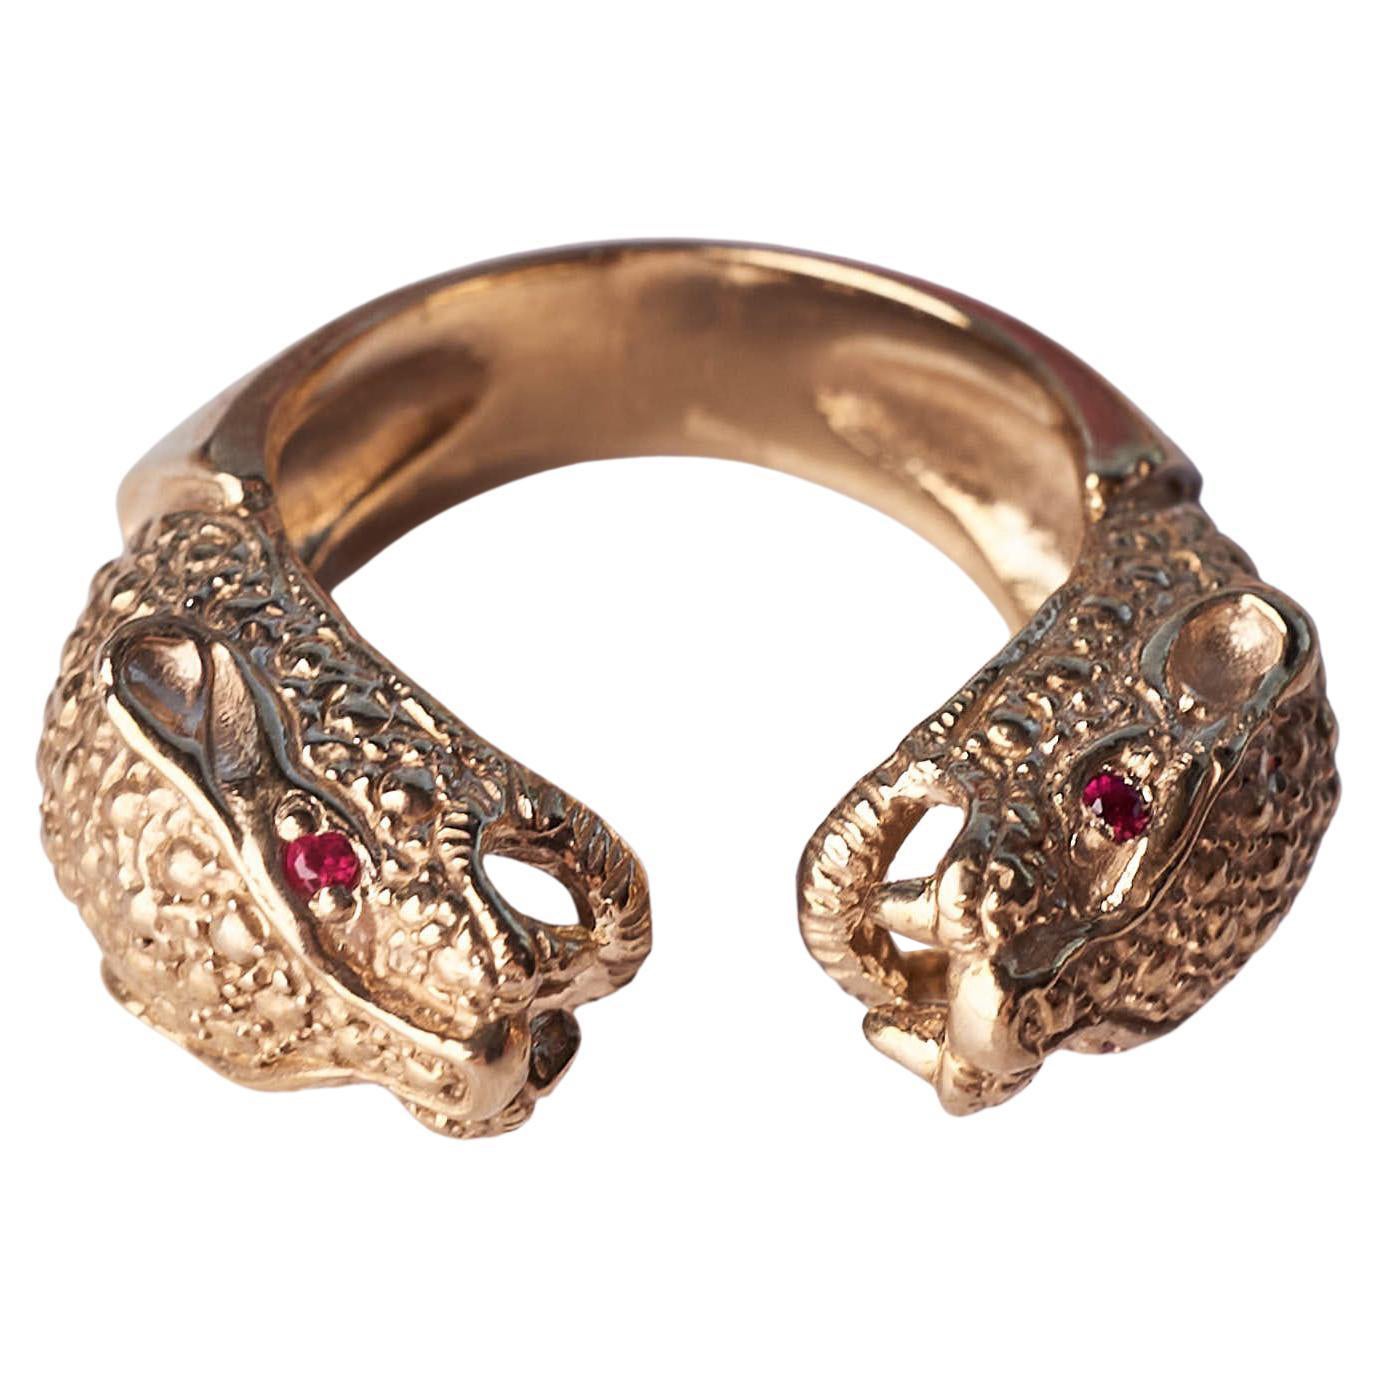 Jaguar-Ring aus Bronze mit Rubin und Jaguar-Tier J Dauphin